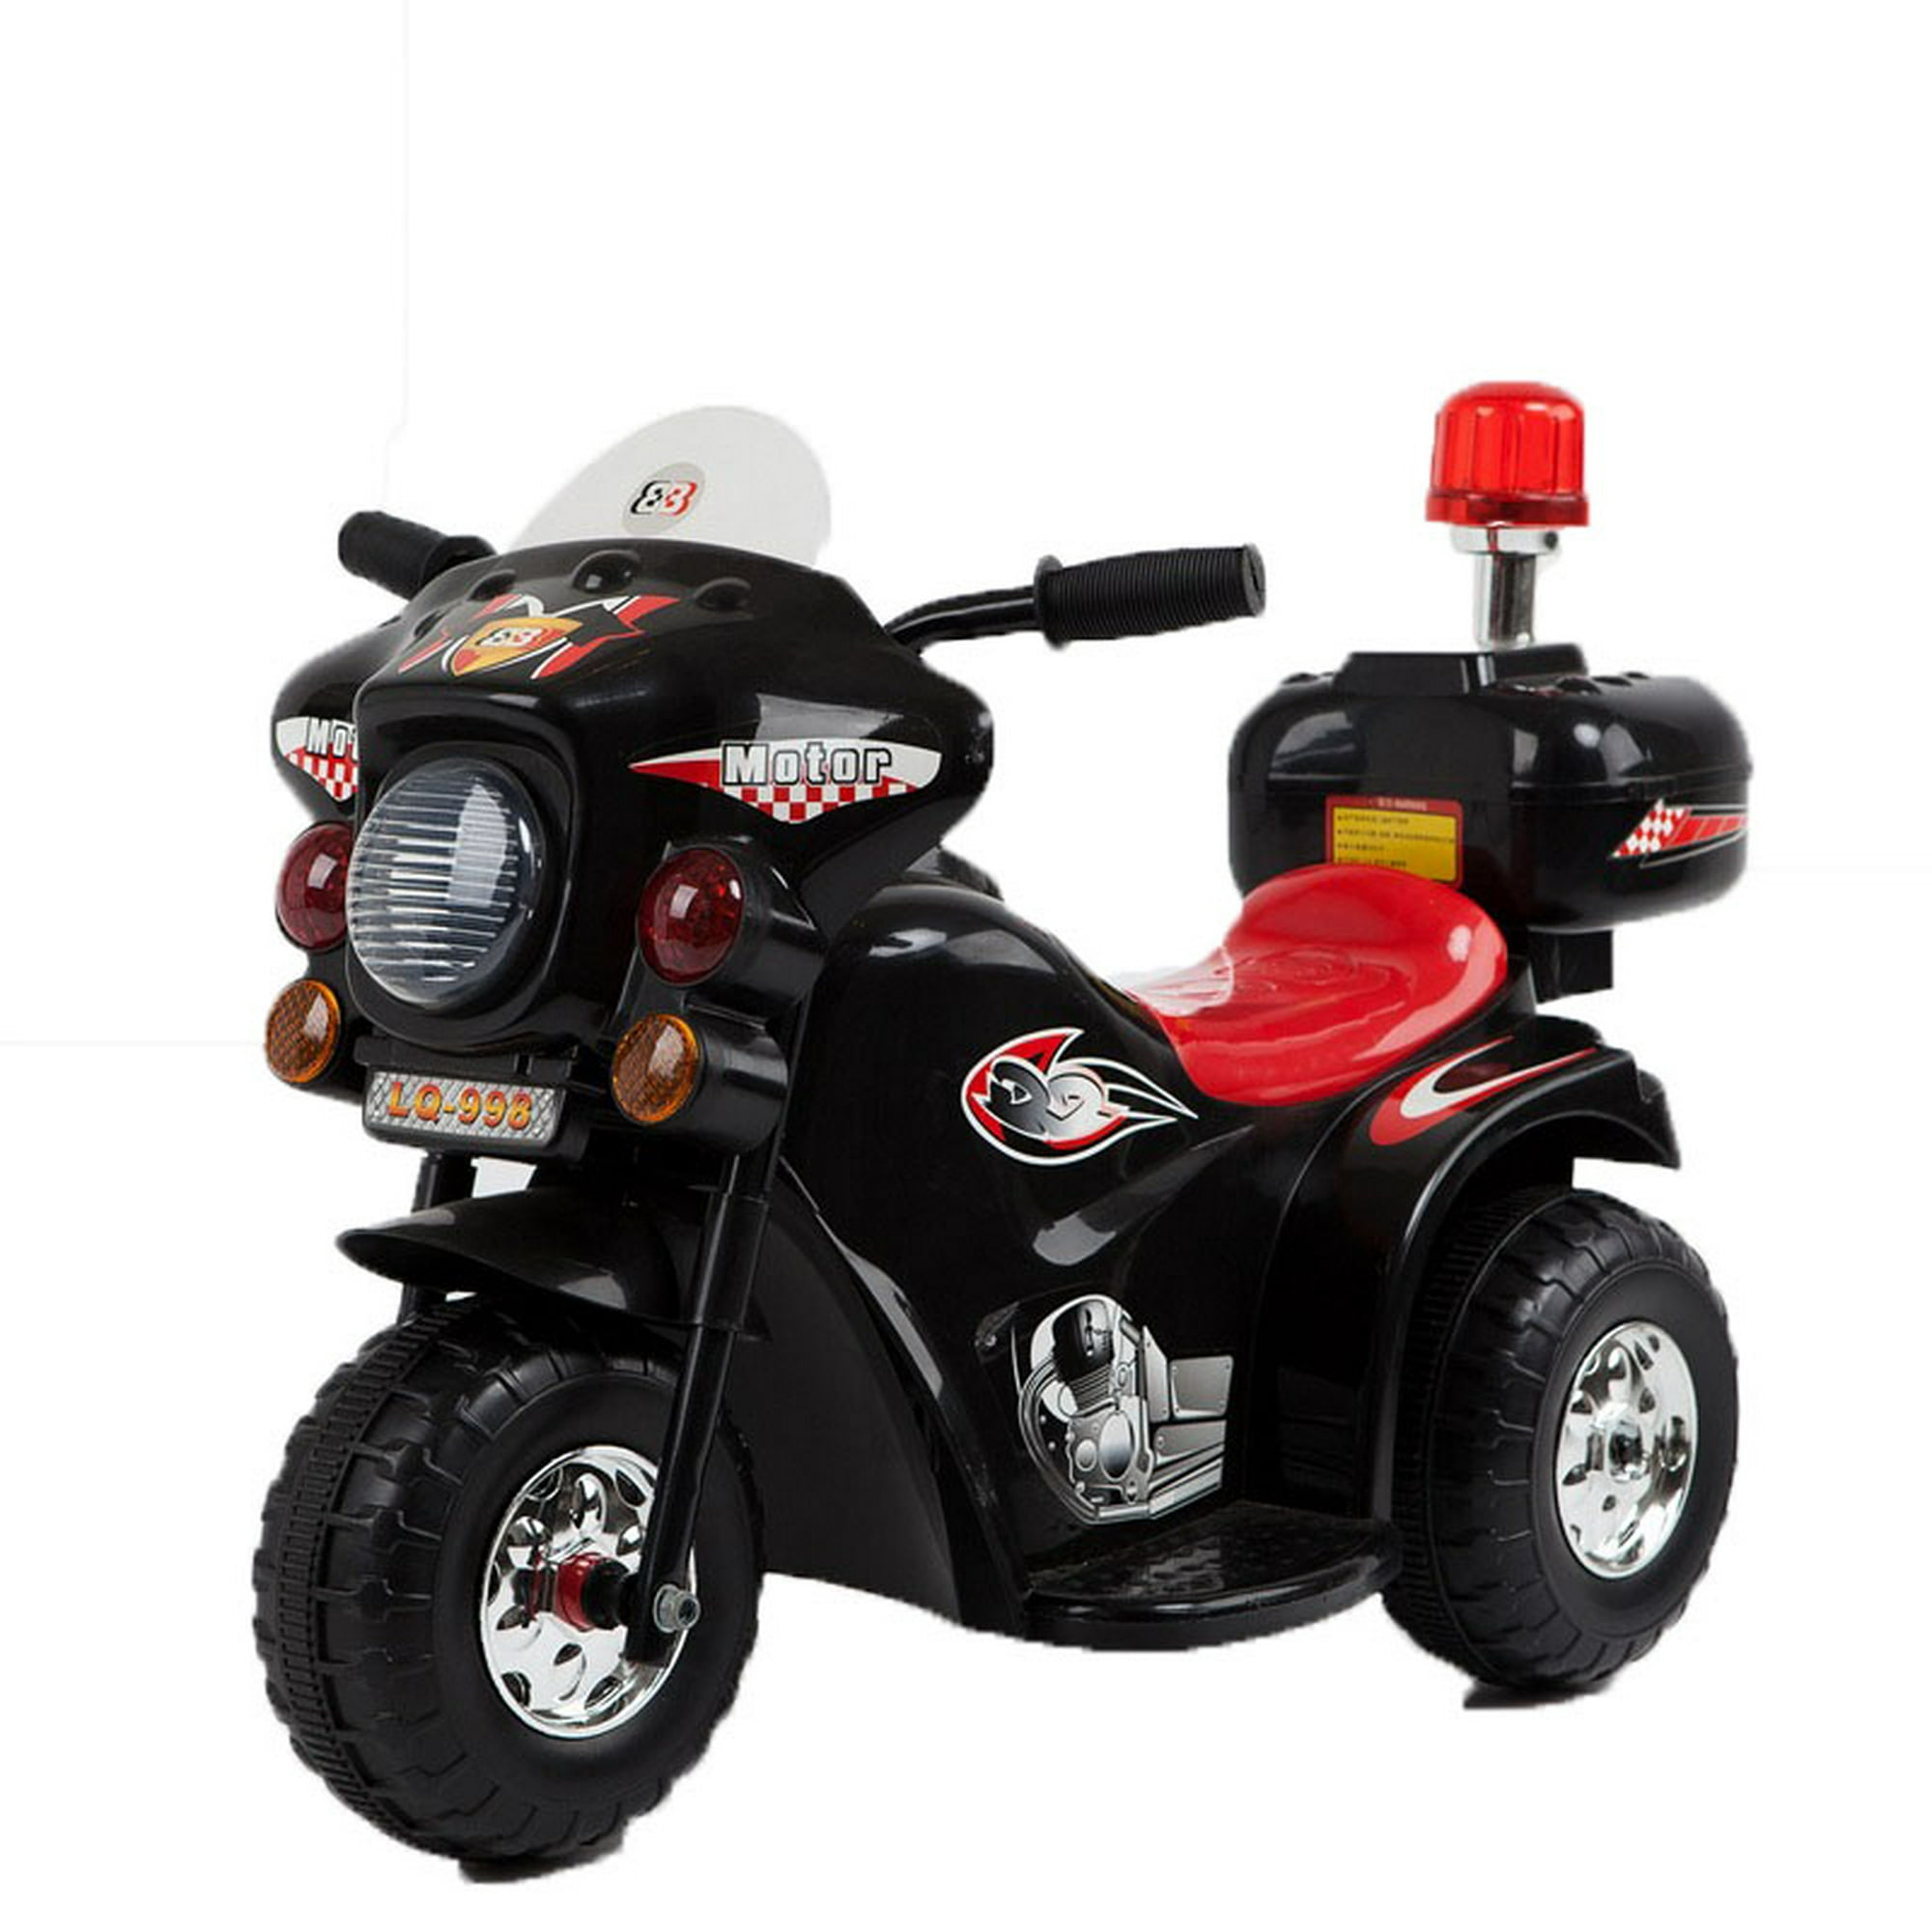 Inspírate - Playkin POLICE NEGRA - Moto electrica niños policia